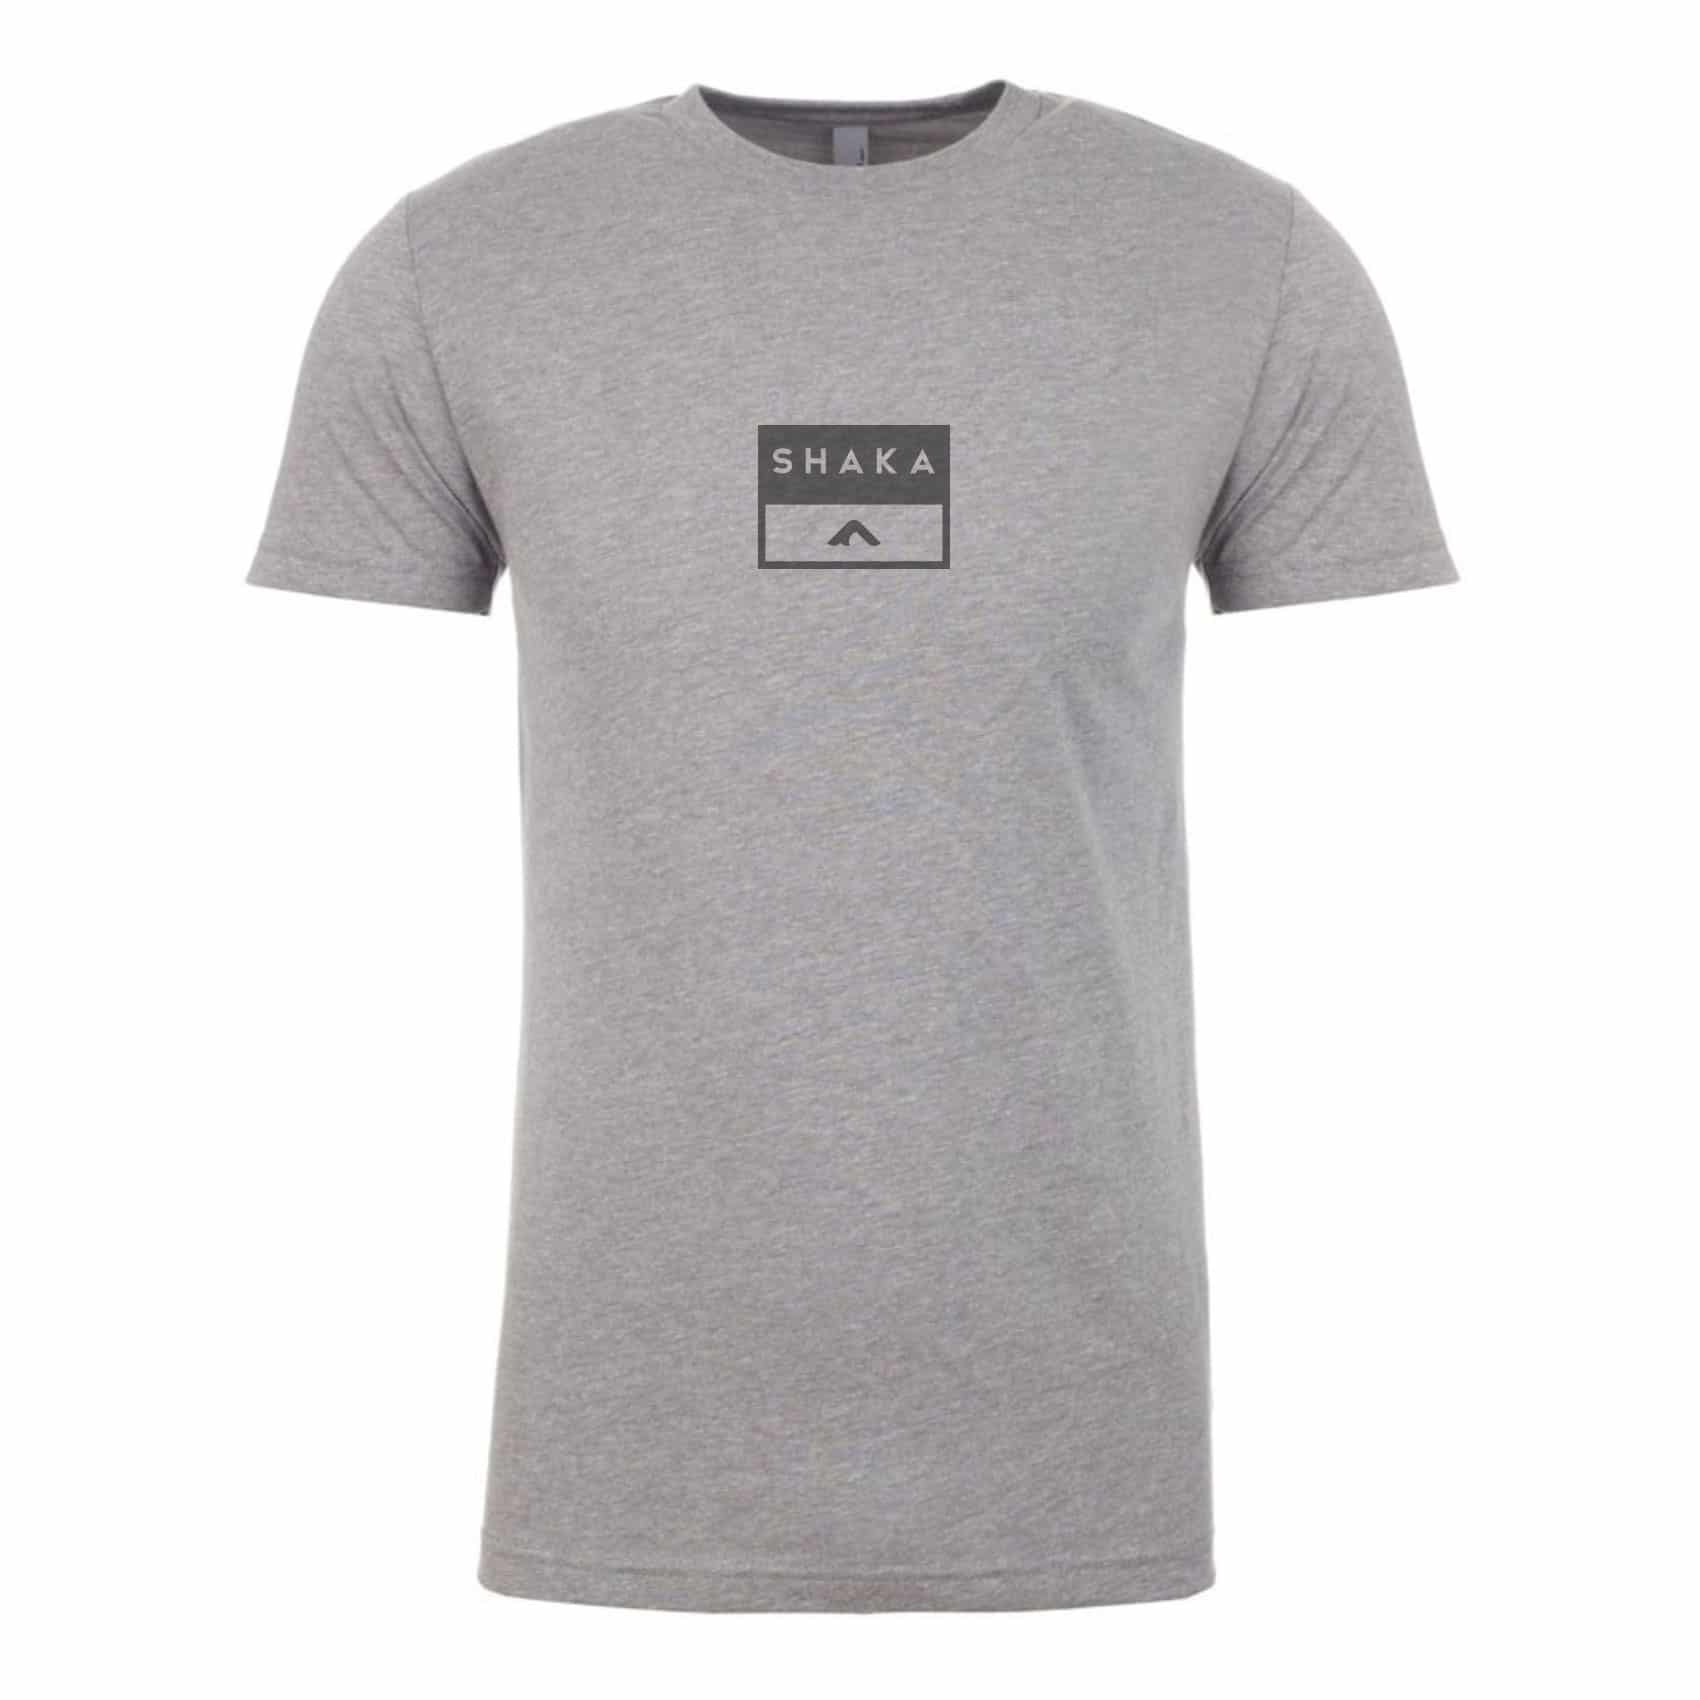 Shaka Shirt - Tag - Shaka Clothing Co